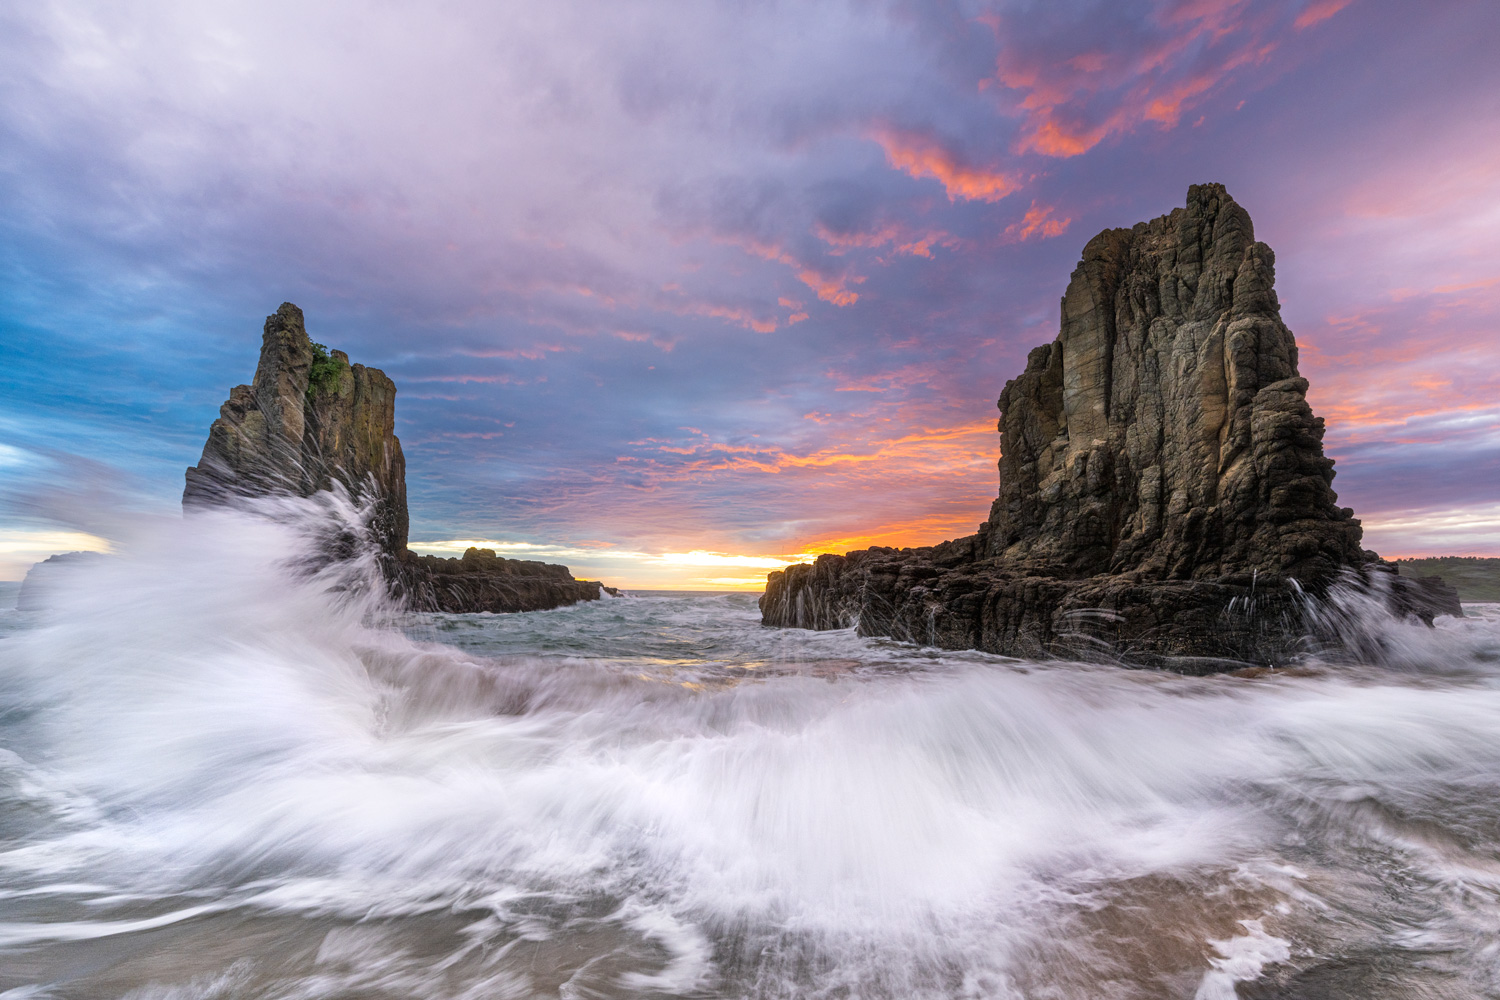 Cathedral Rocks sunrise, Kiama New South Wales, Australia.